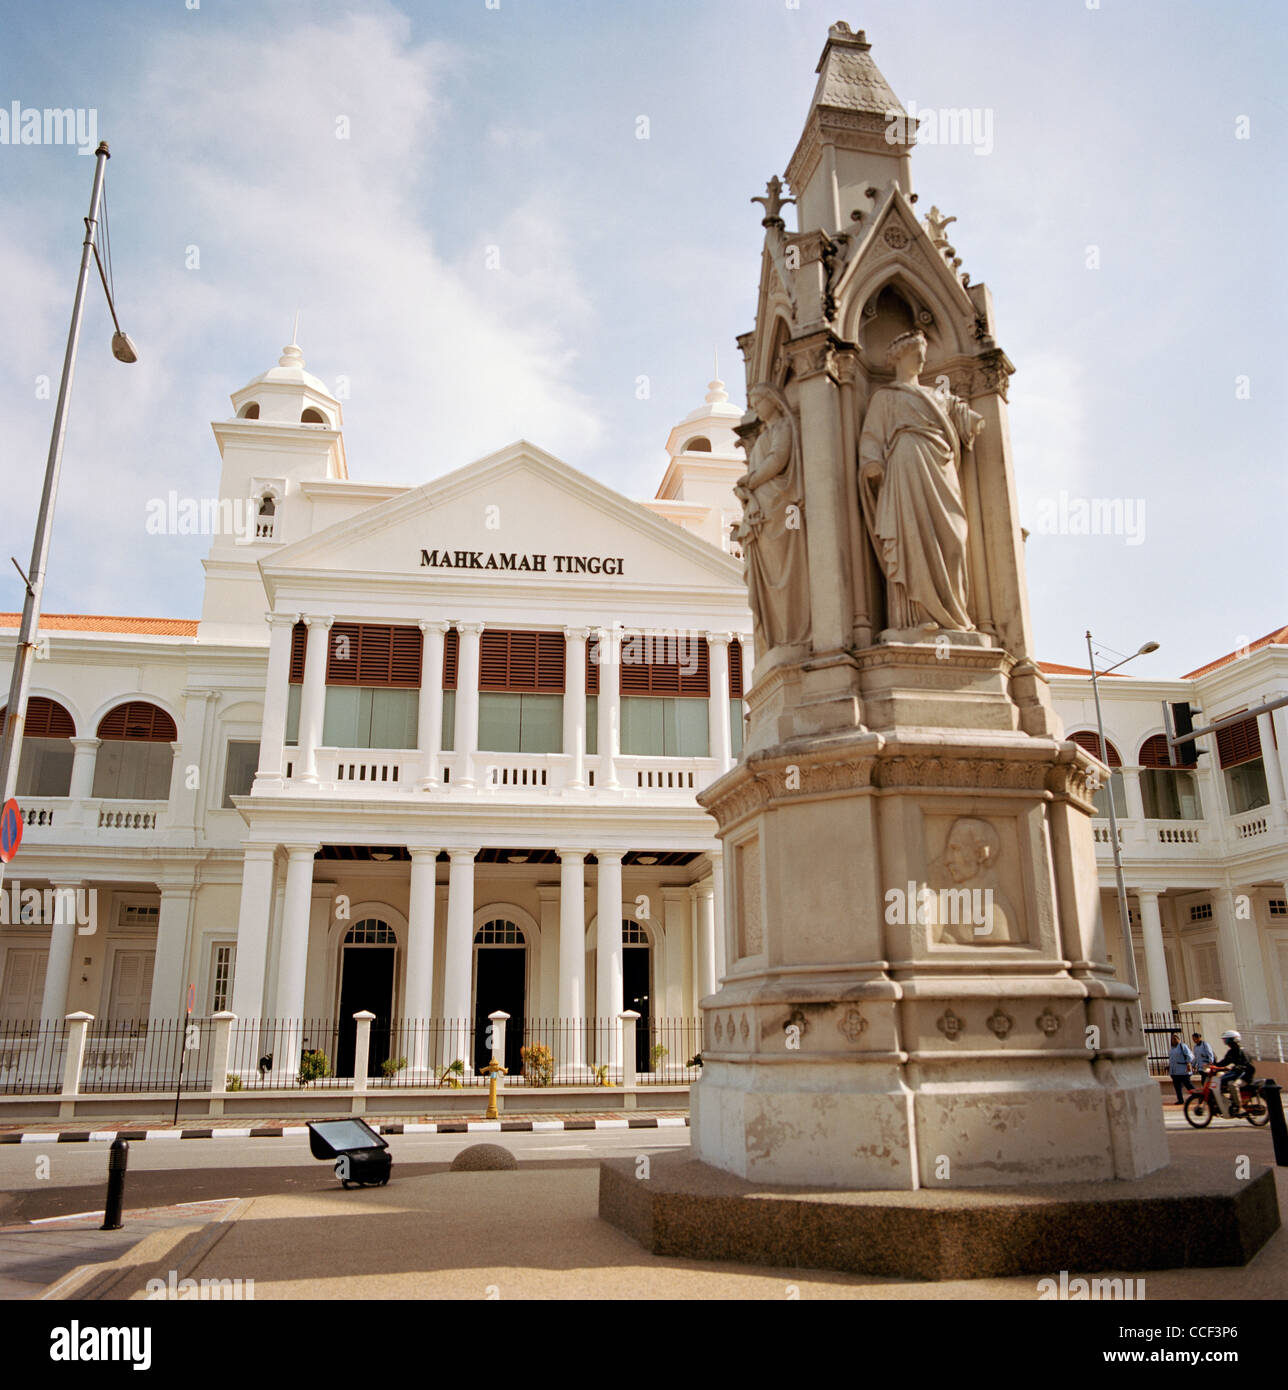 Mahkamah Tinggi der Oberste Gerichtshof in George Town in Insel Penang in Malaysia in Fernost Südostasien. Architektur die koloniale Geschichte Reisen Stockfoto